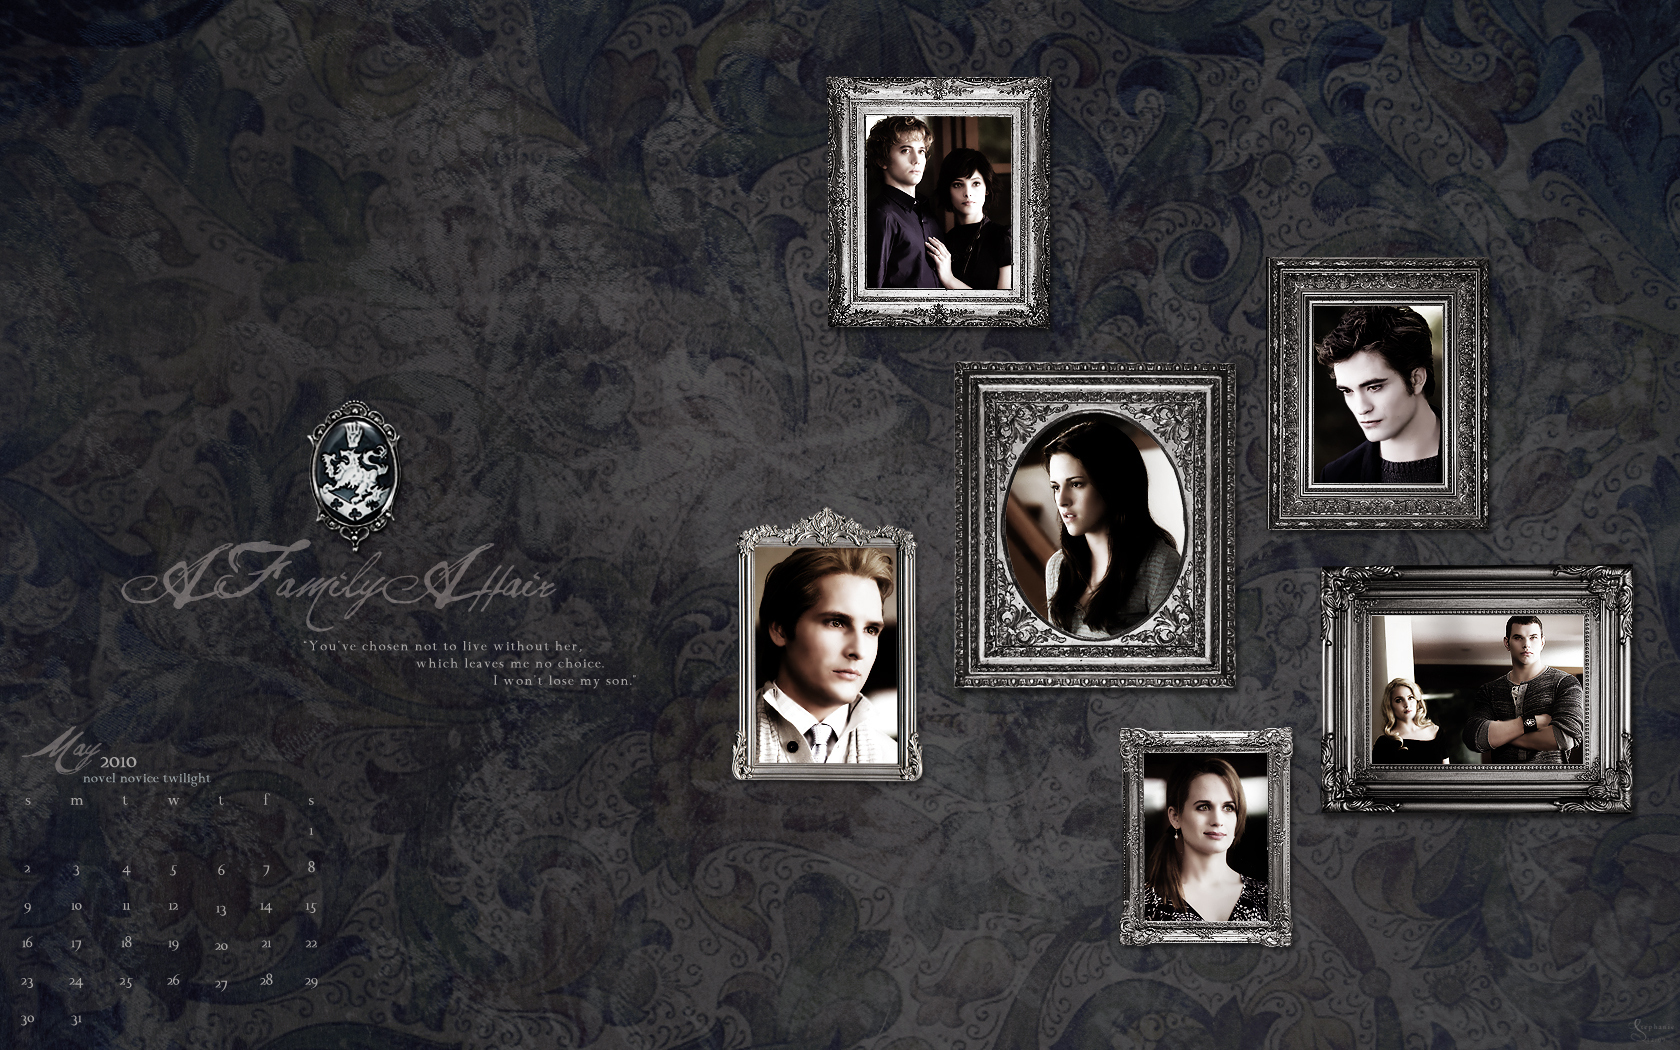 Twilight Saga Wallpaper And Screensavers